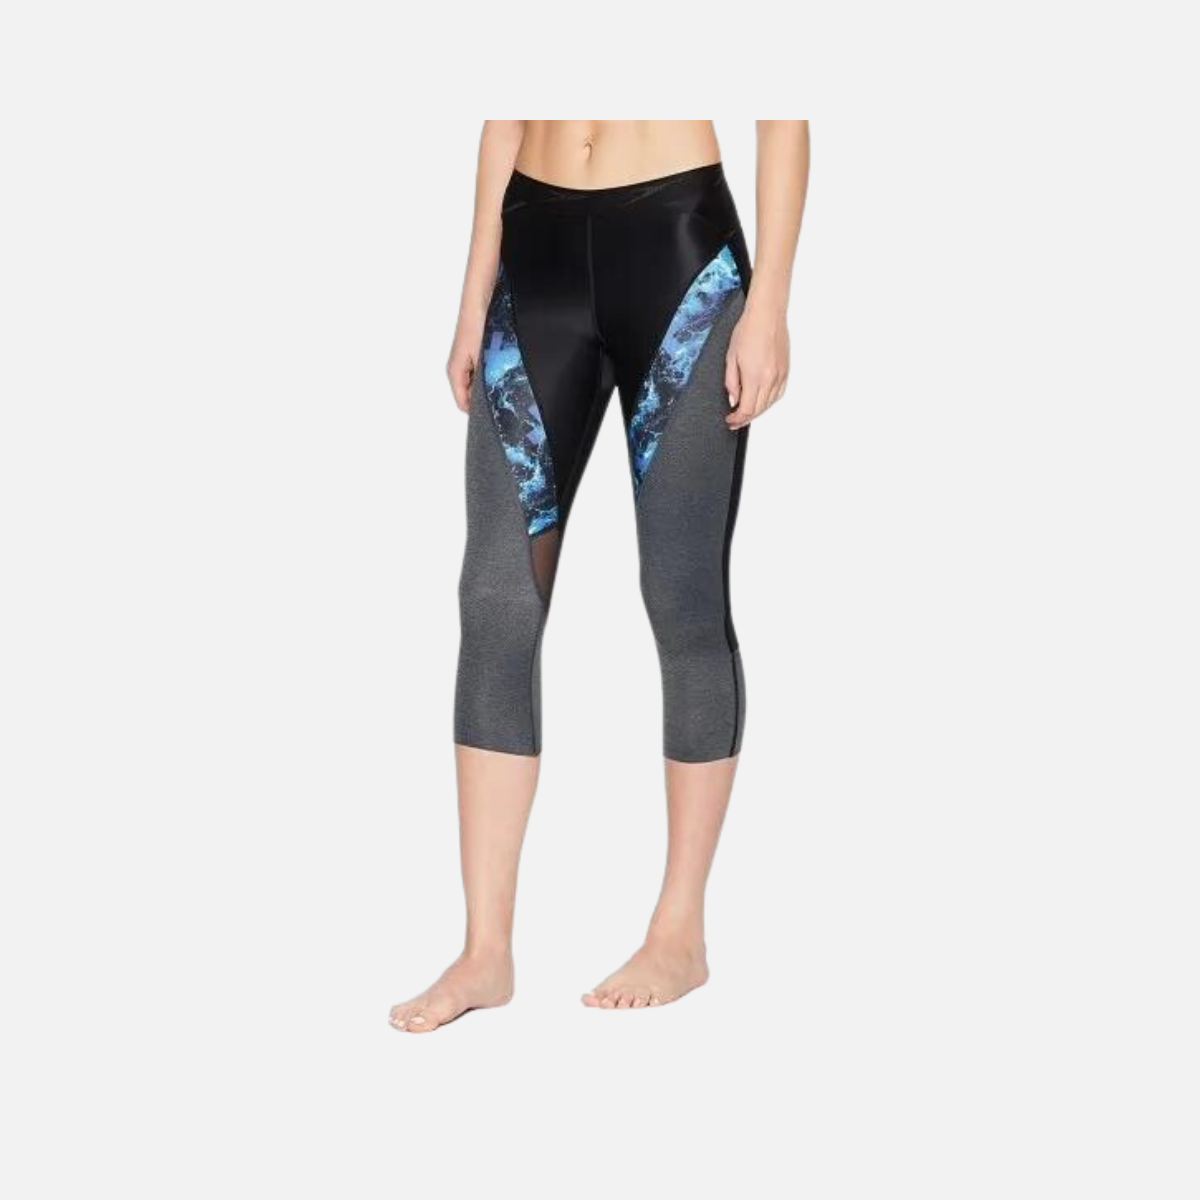 Speedo Swimwear Women's Sports Capri -Black/Ultramarine/Stellar